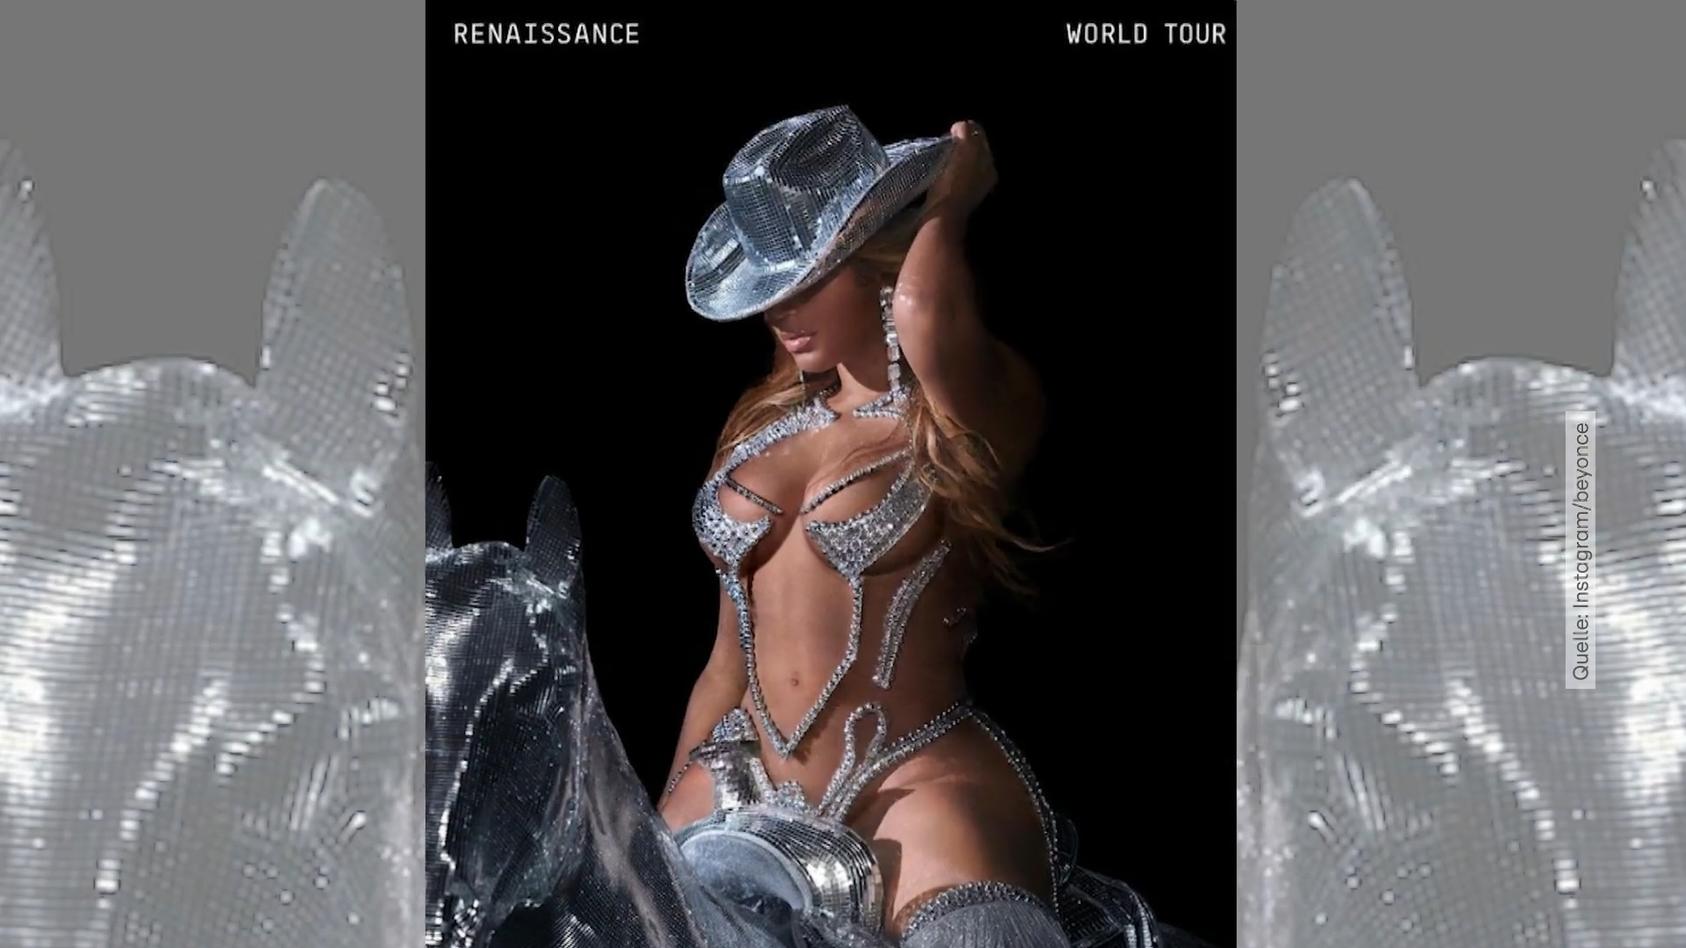 "Sie hat Insta gekillt" - Beyoncé kündigt halbnackt Welttour an - das Netz flippt aus